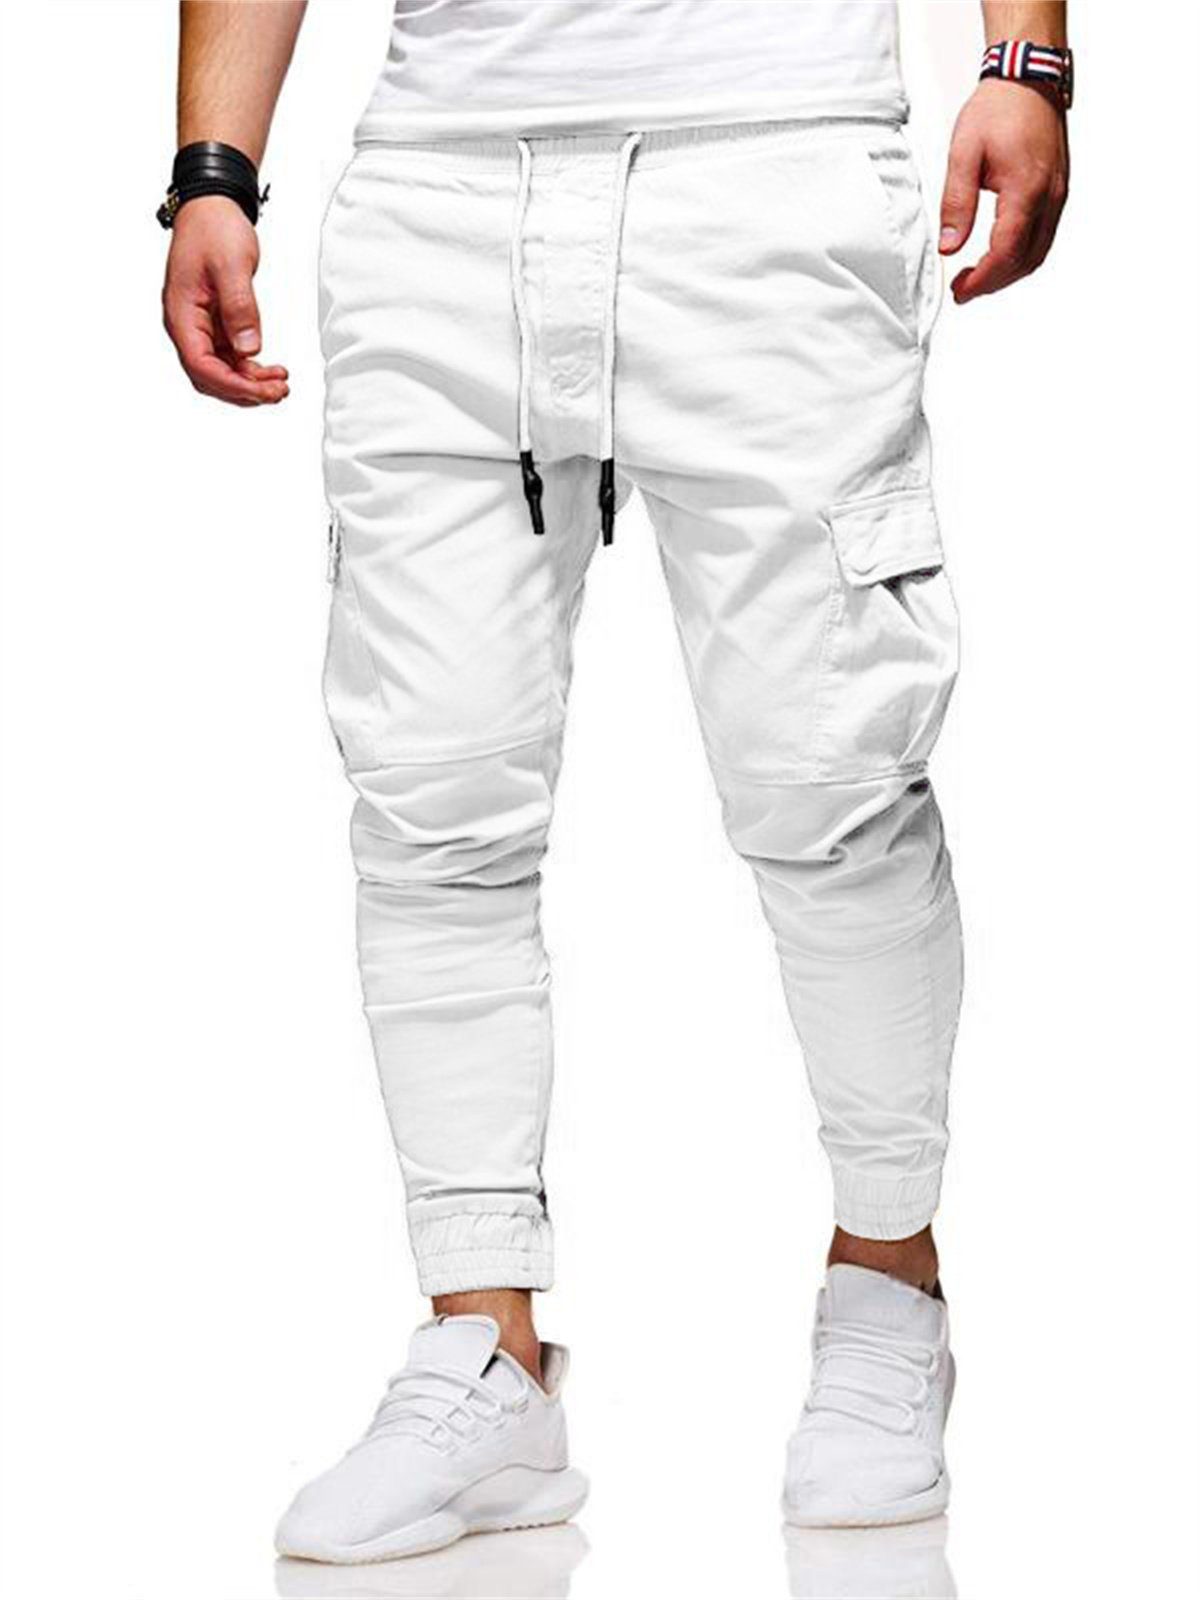 Discaver Loungepants Herren Tether Elastic Loose Long Casual Sporthose Weiß